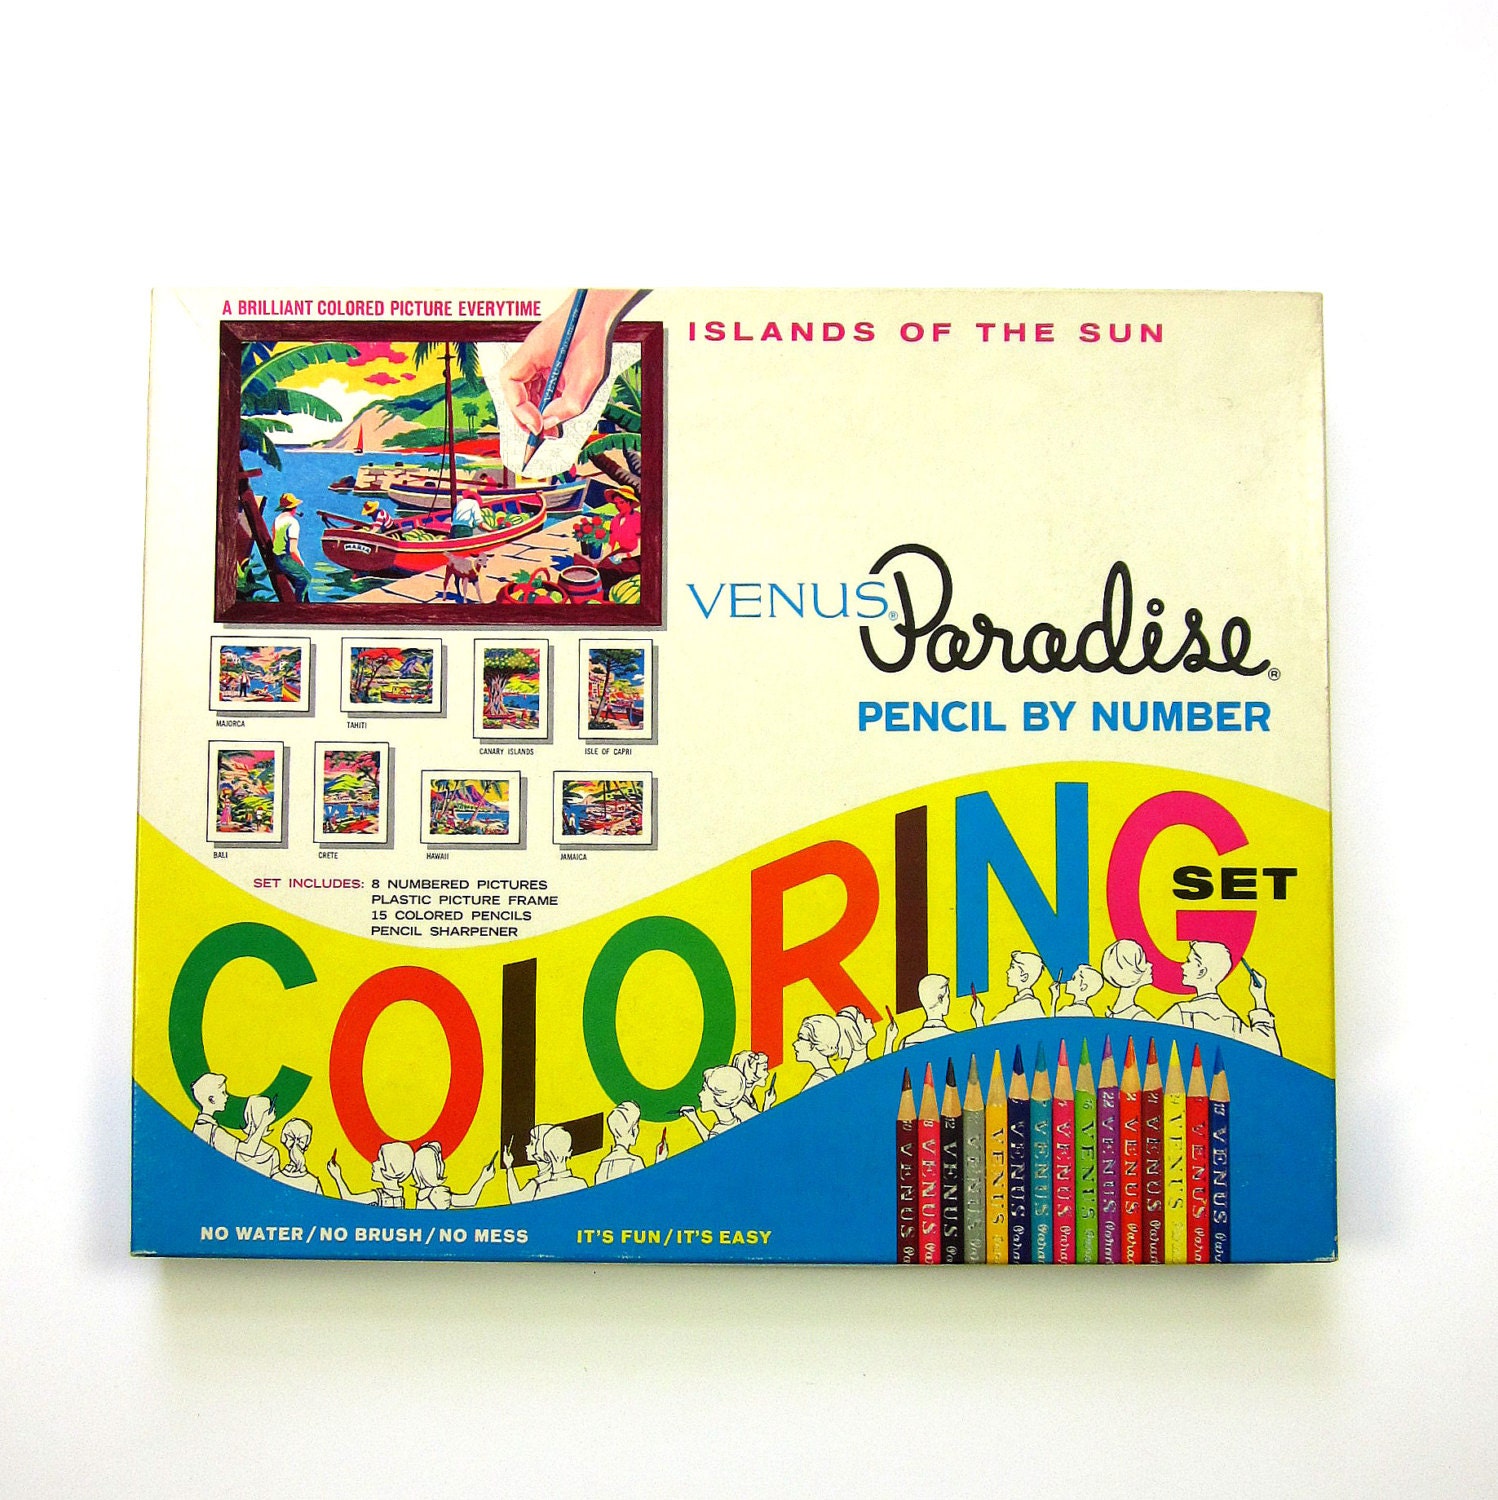 Venus Paradise Pencil by Number Coloring Set 60s